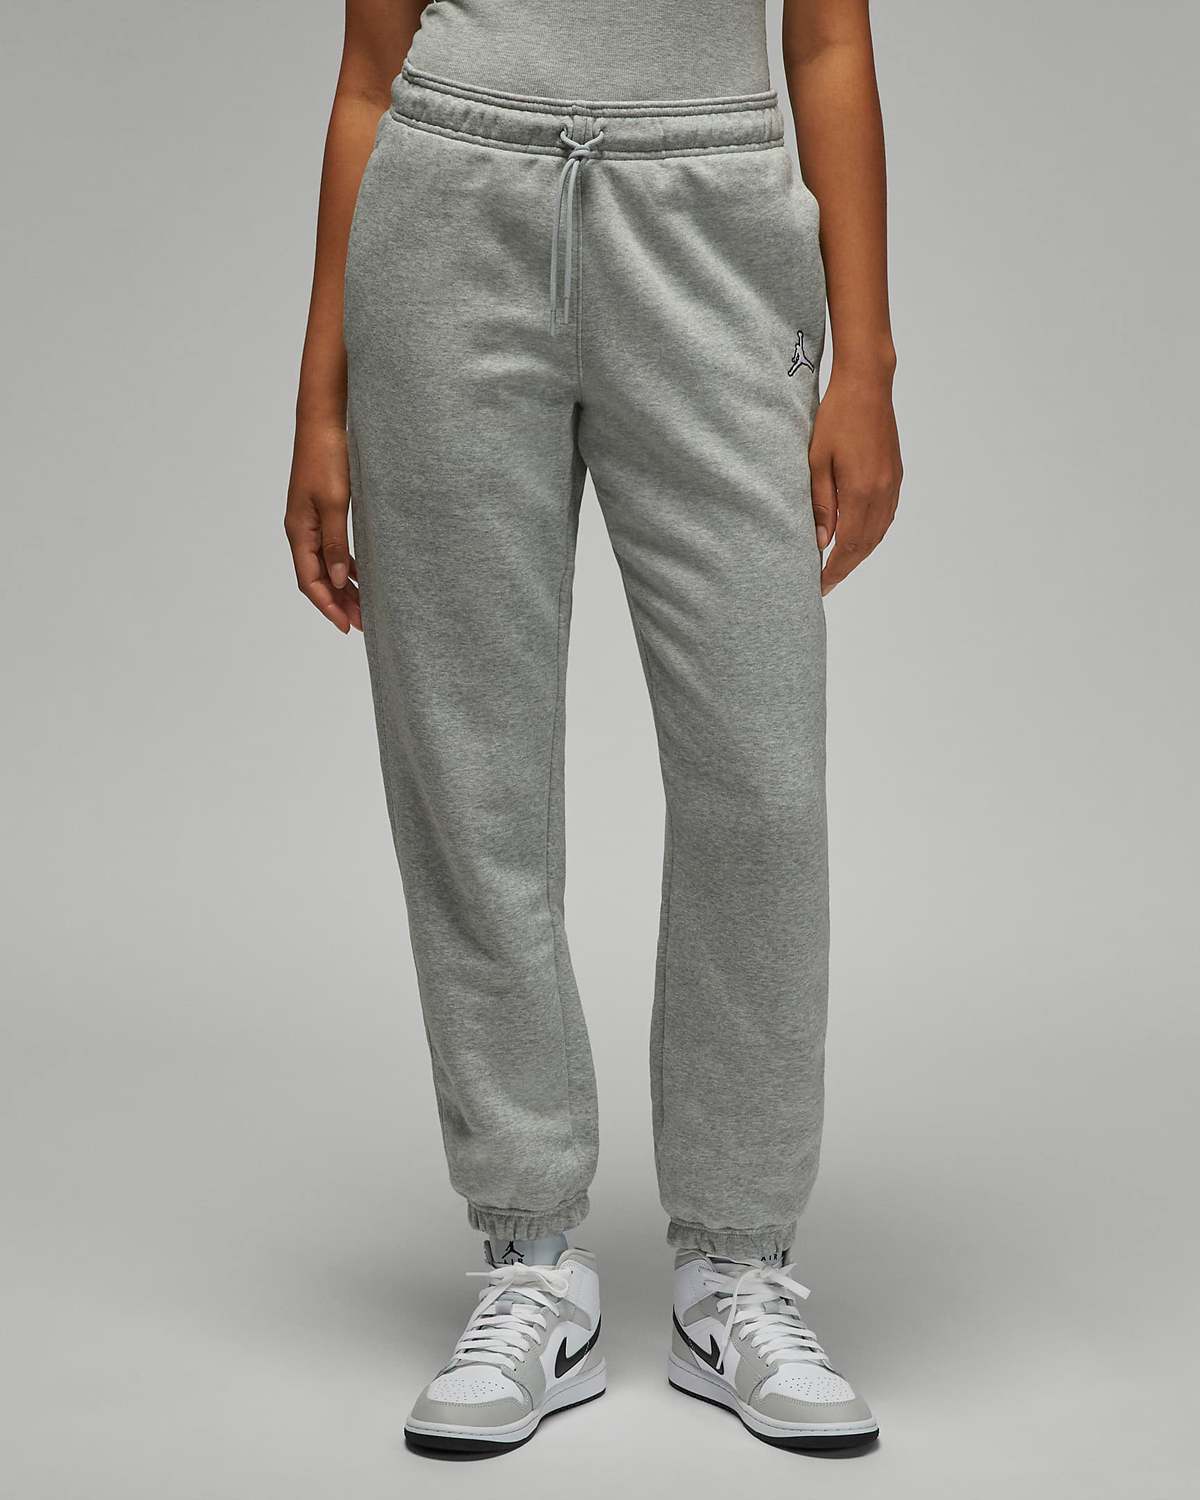 Jordan-Brooklyn-Womens-Fleece-Pants-Grey